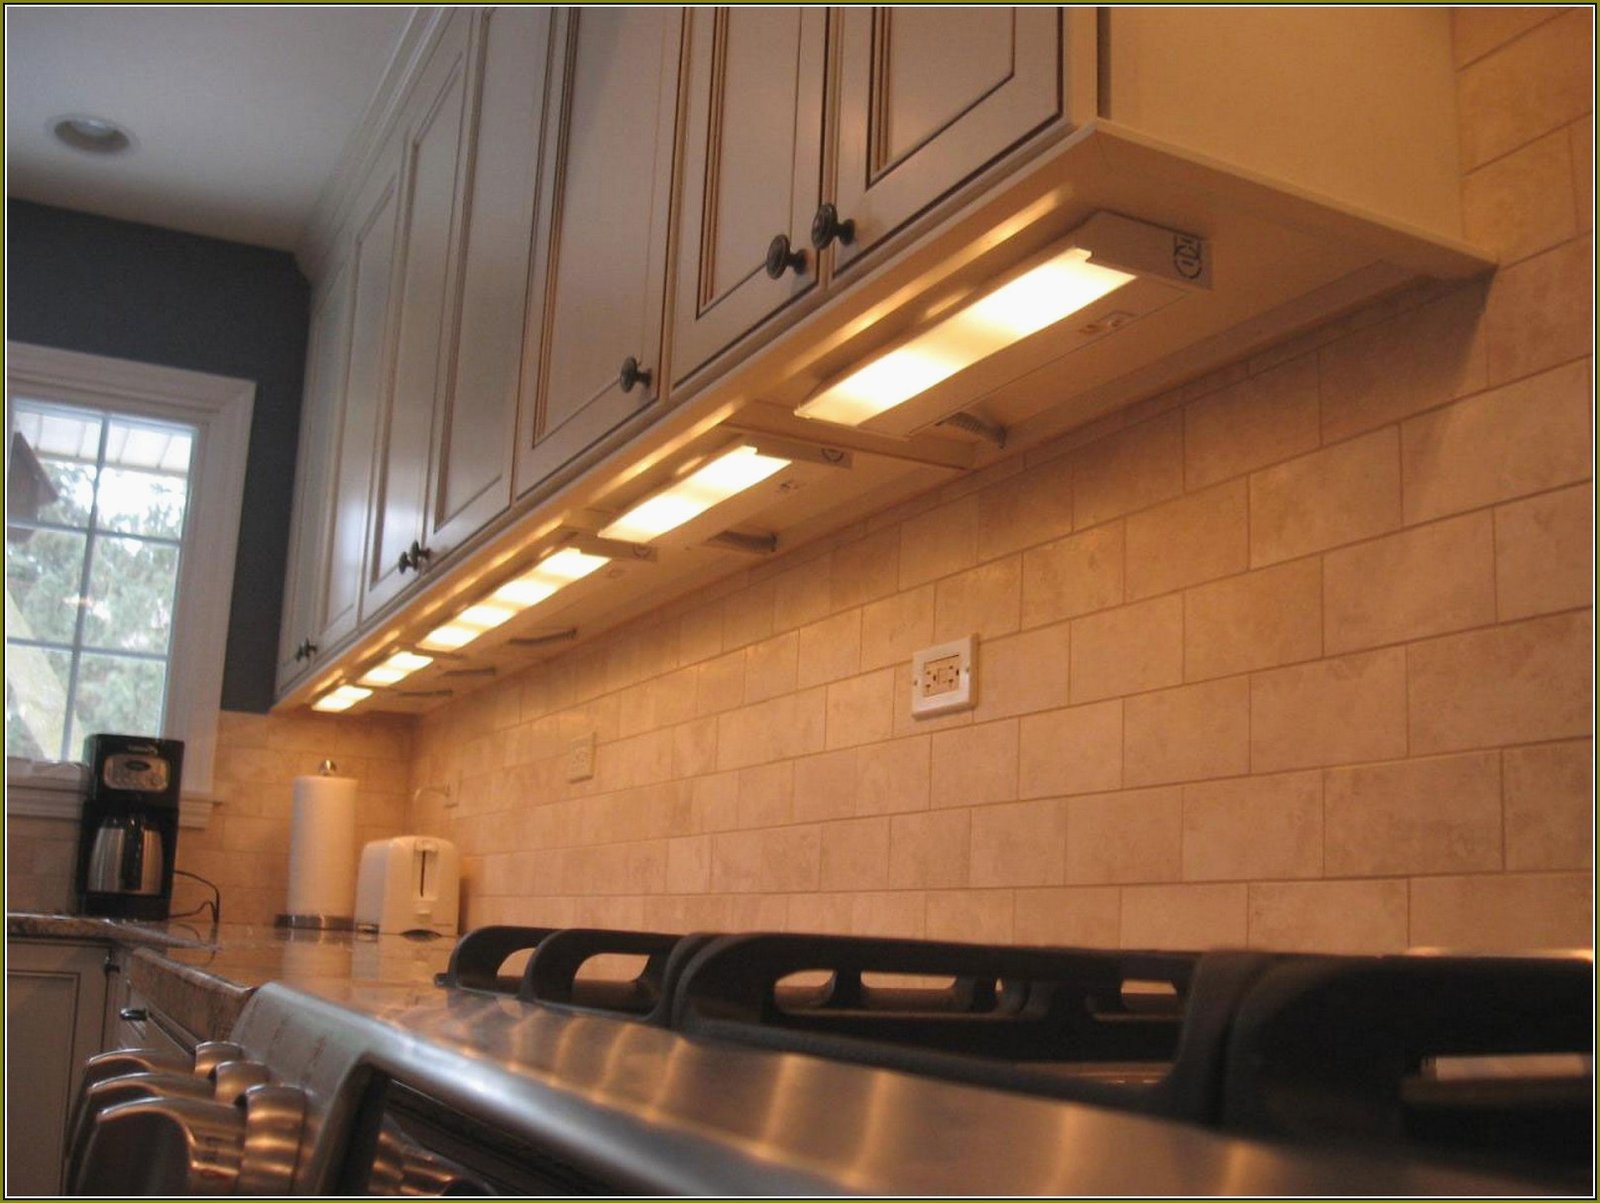  install kitchen cabinet lighting